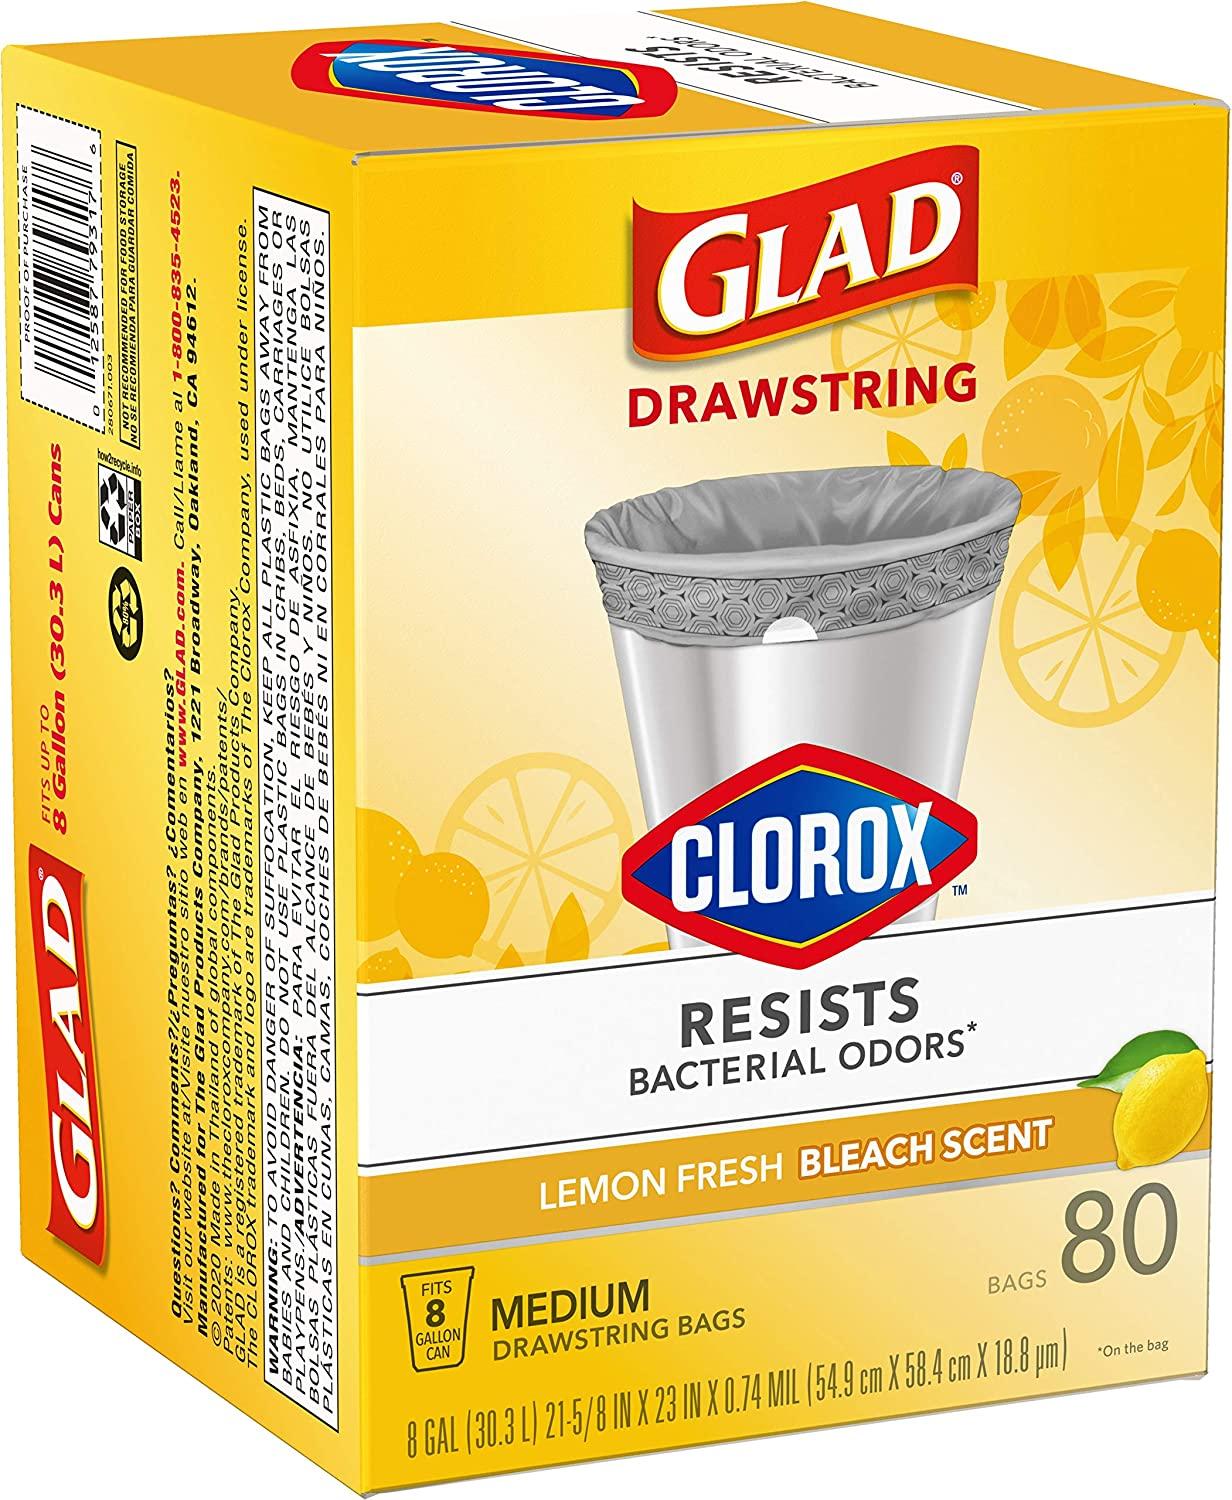 Glad with Clorox Lemon Fresh Bleach Scent Small Drawstring Trash